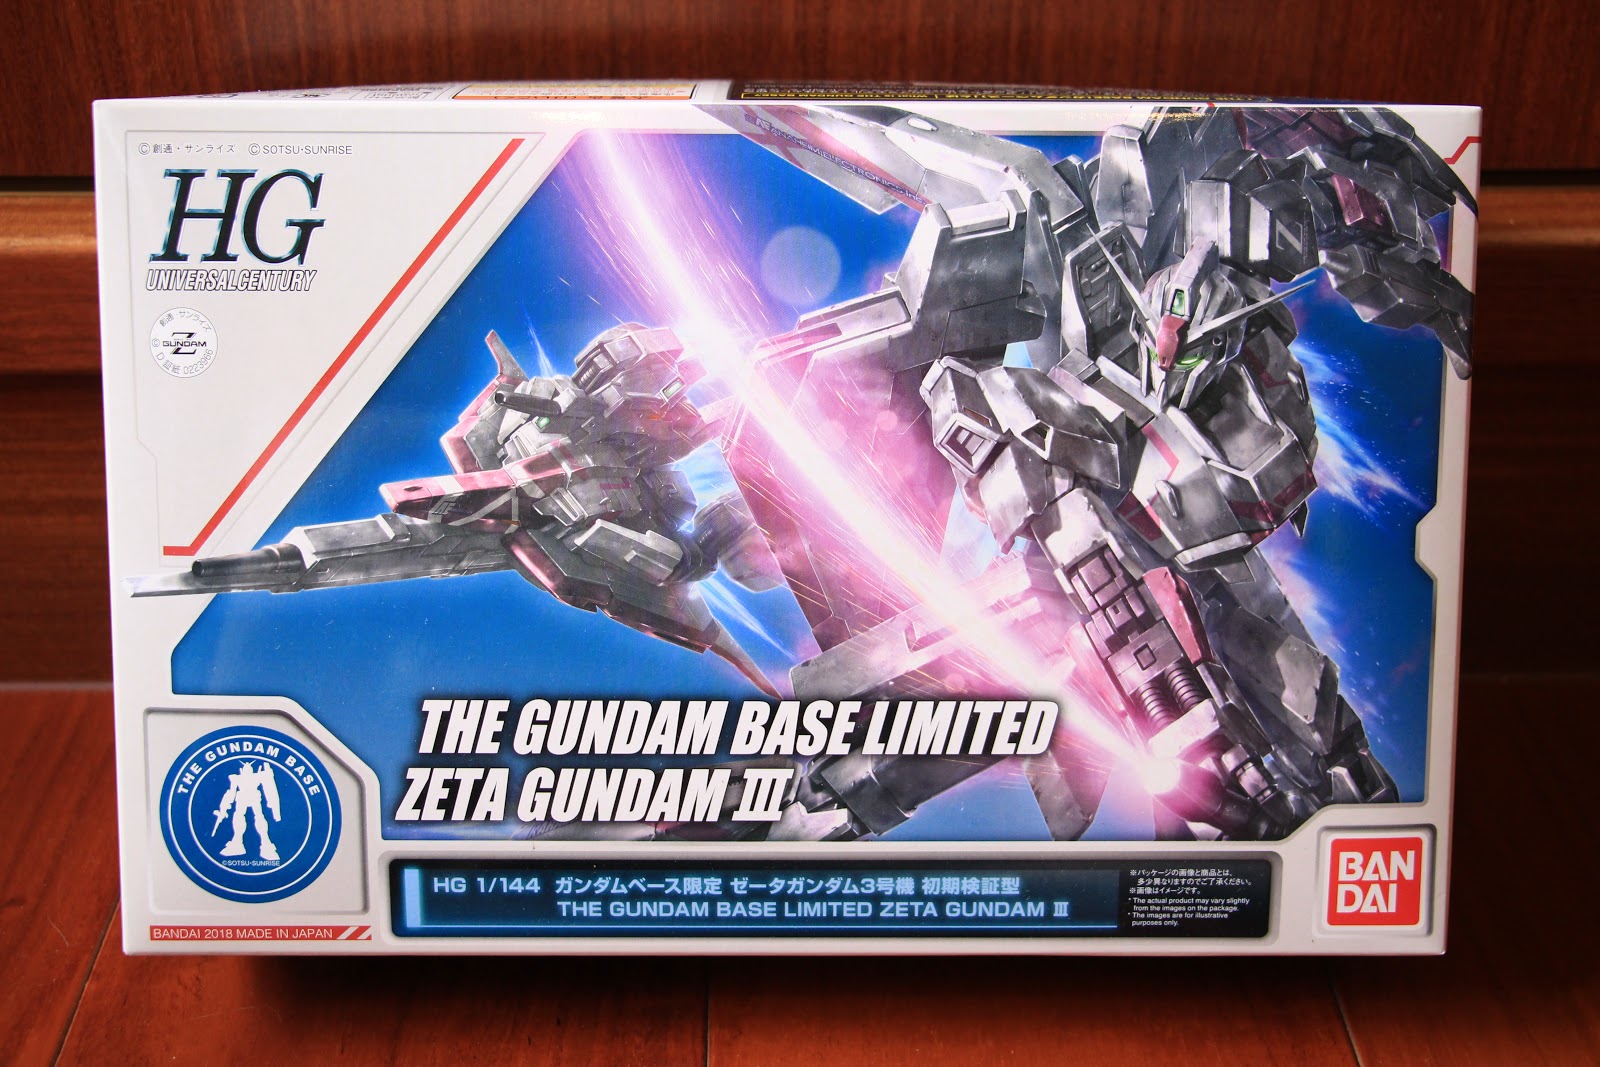 HG Zeta Gundam III The Gundam Base Limited